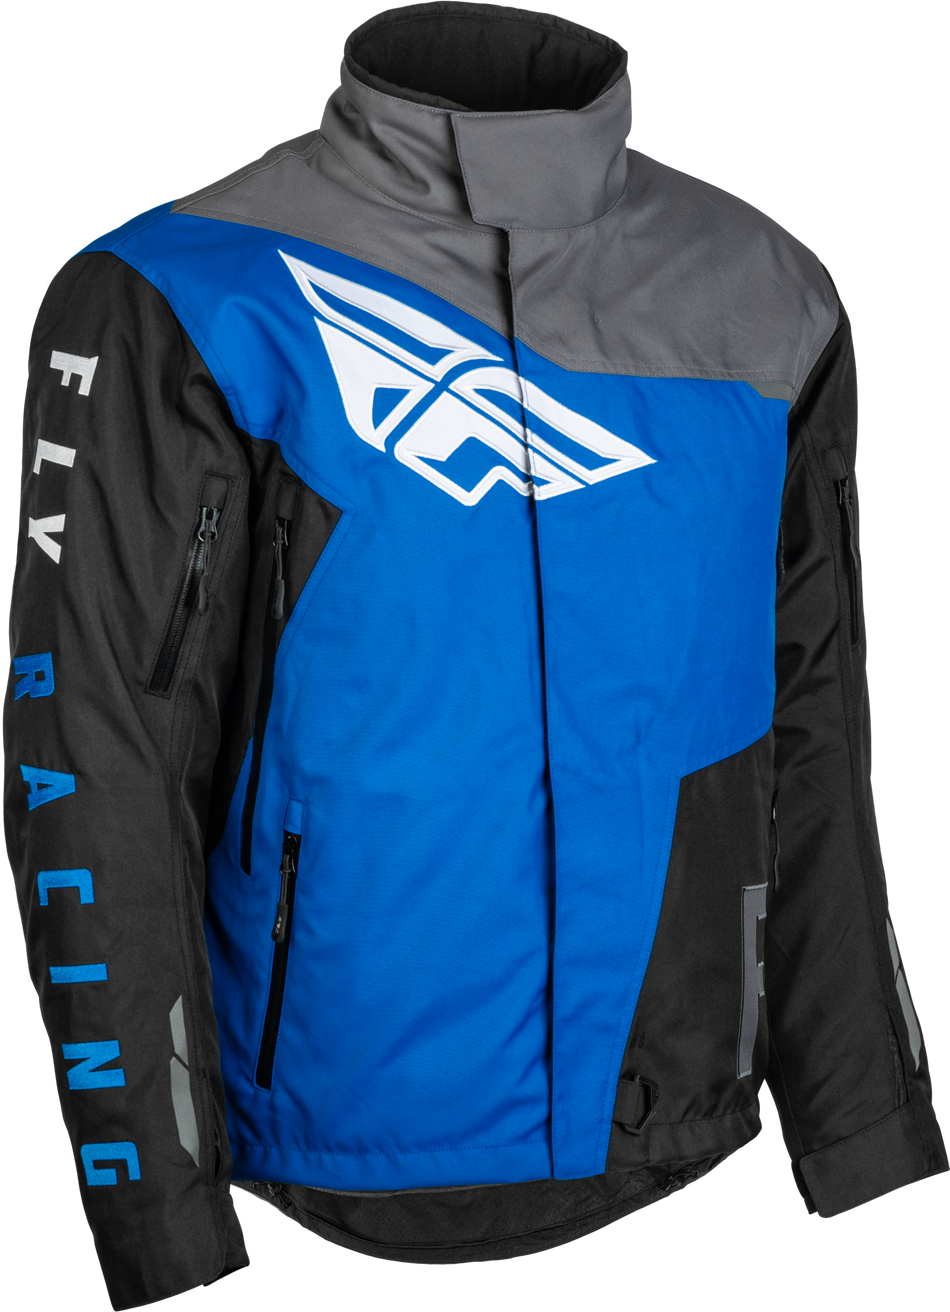 FLY RACING Youth Snx Pro Jacket Black/Grey/Blue Ys 470-4116YS